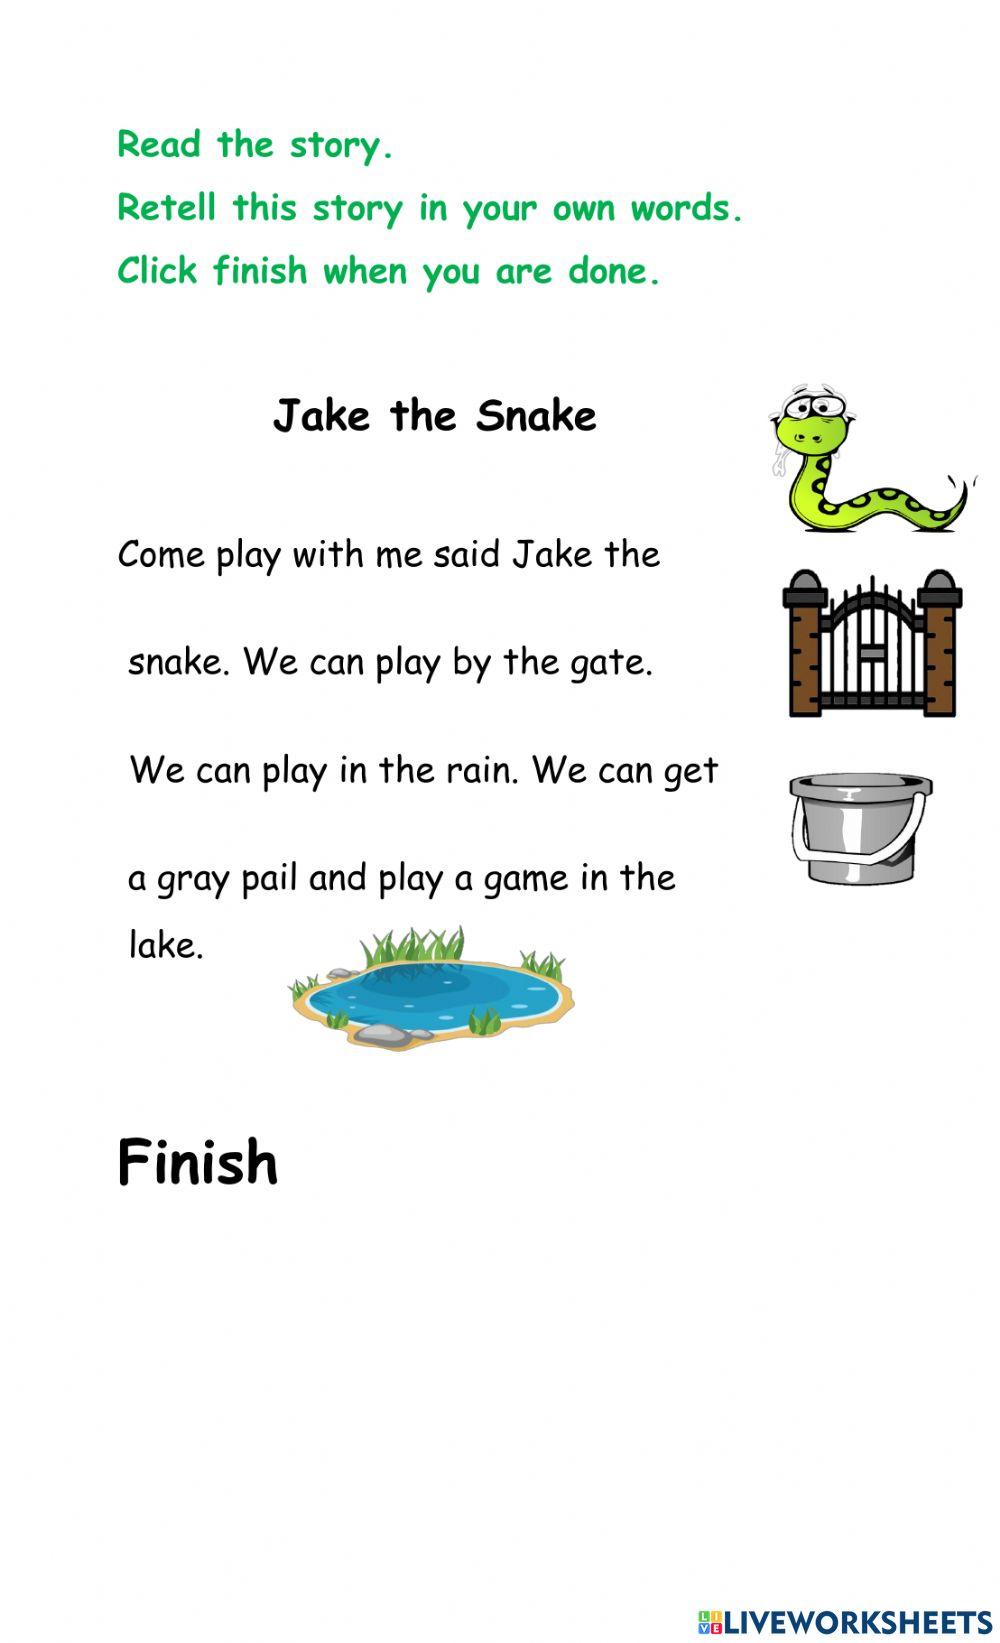 Jake the snake